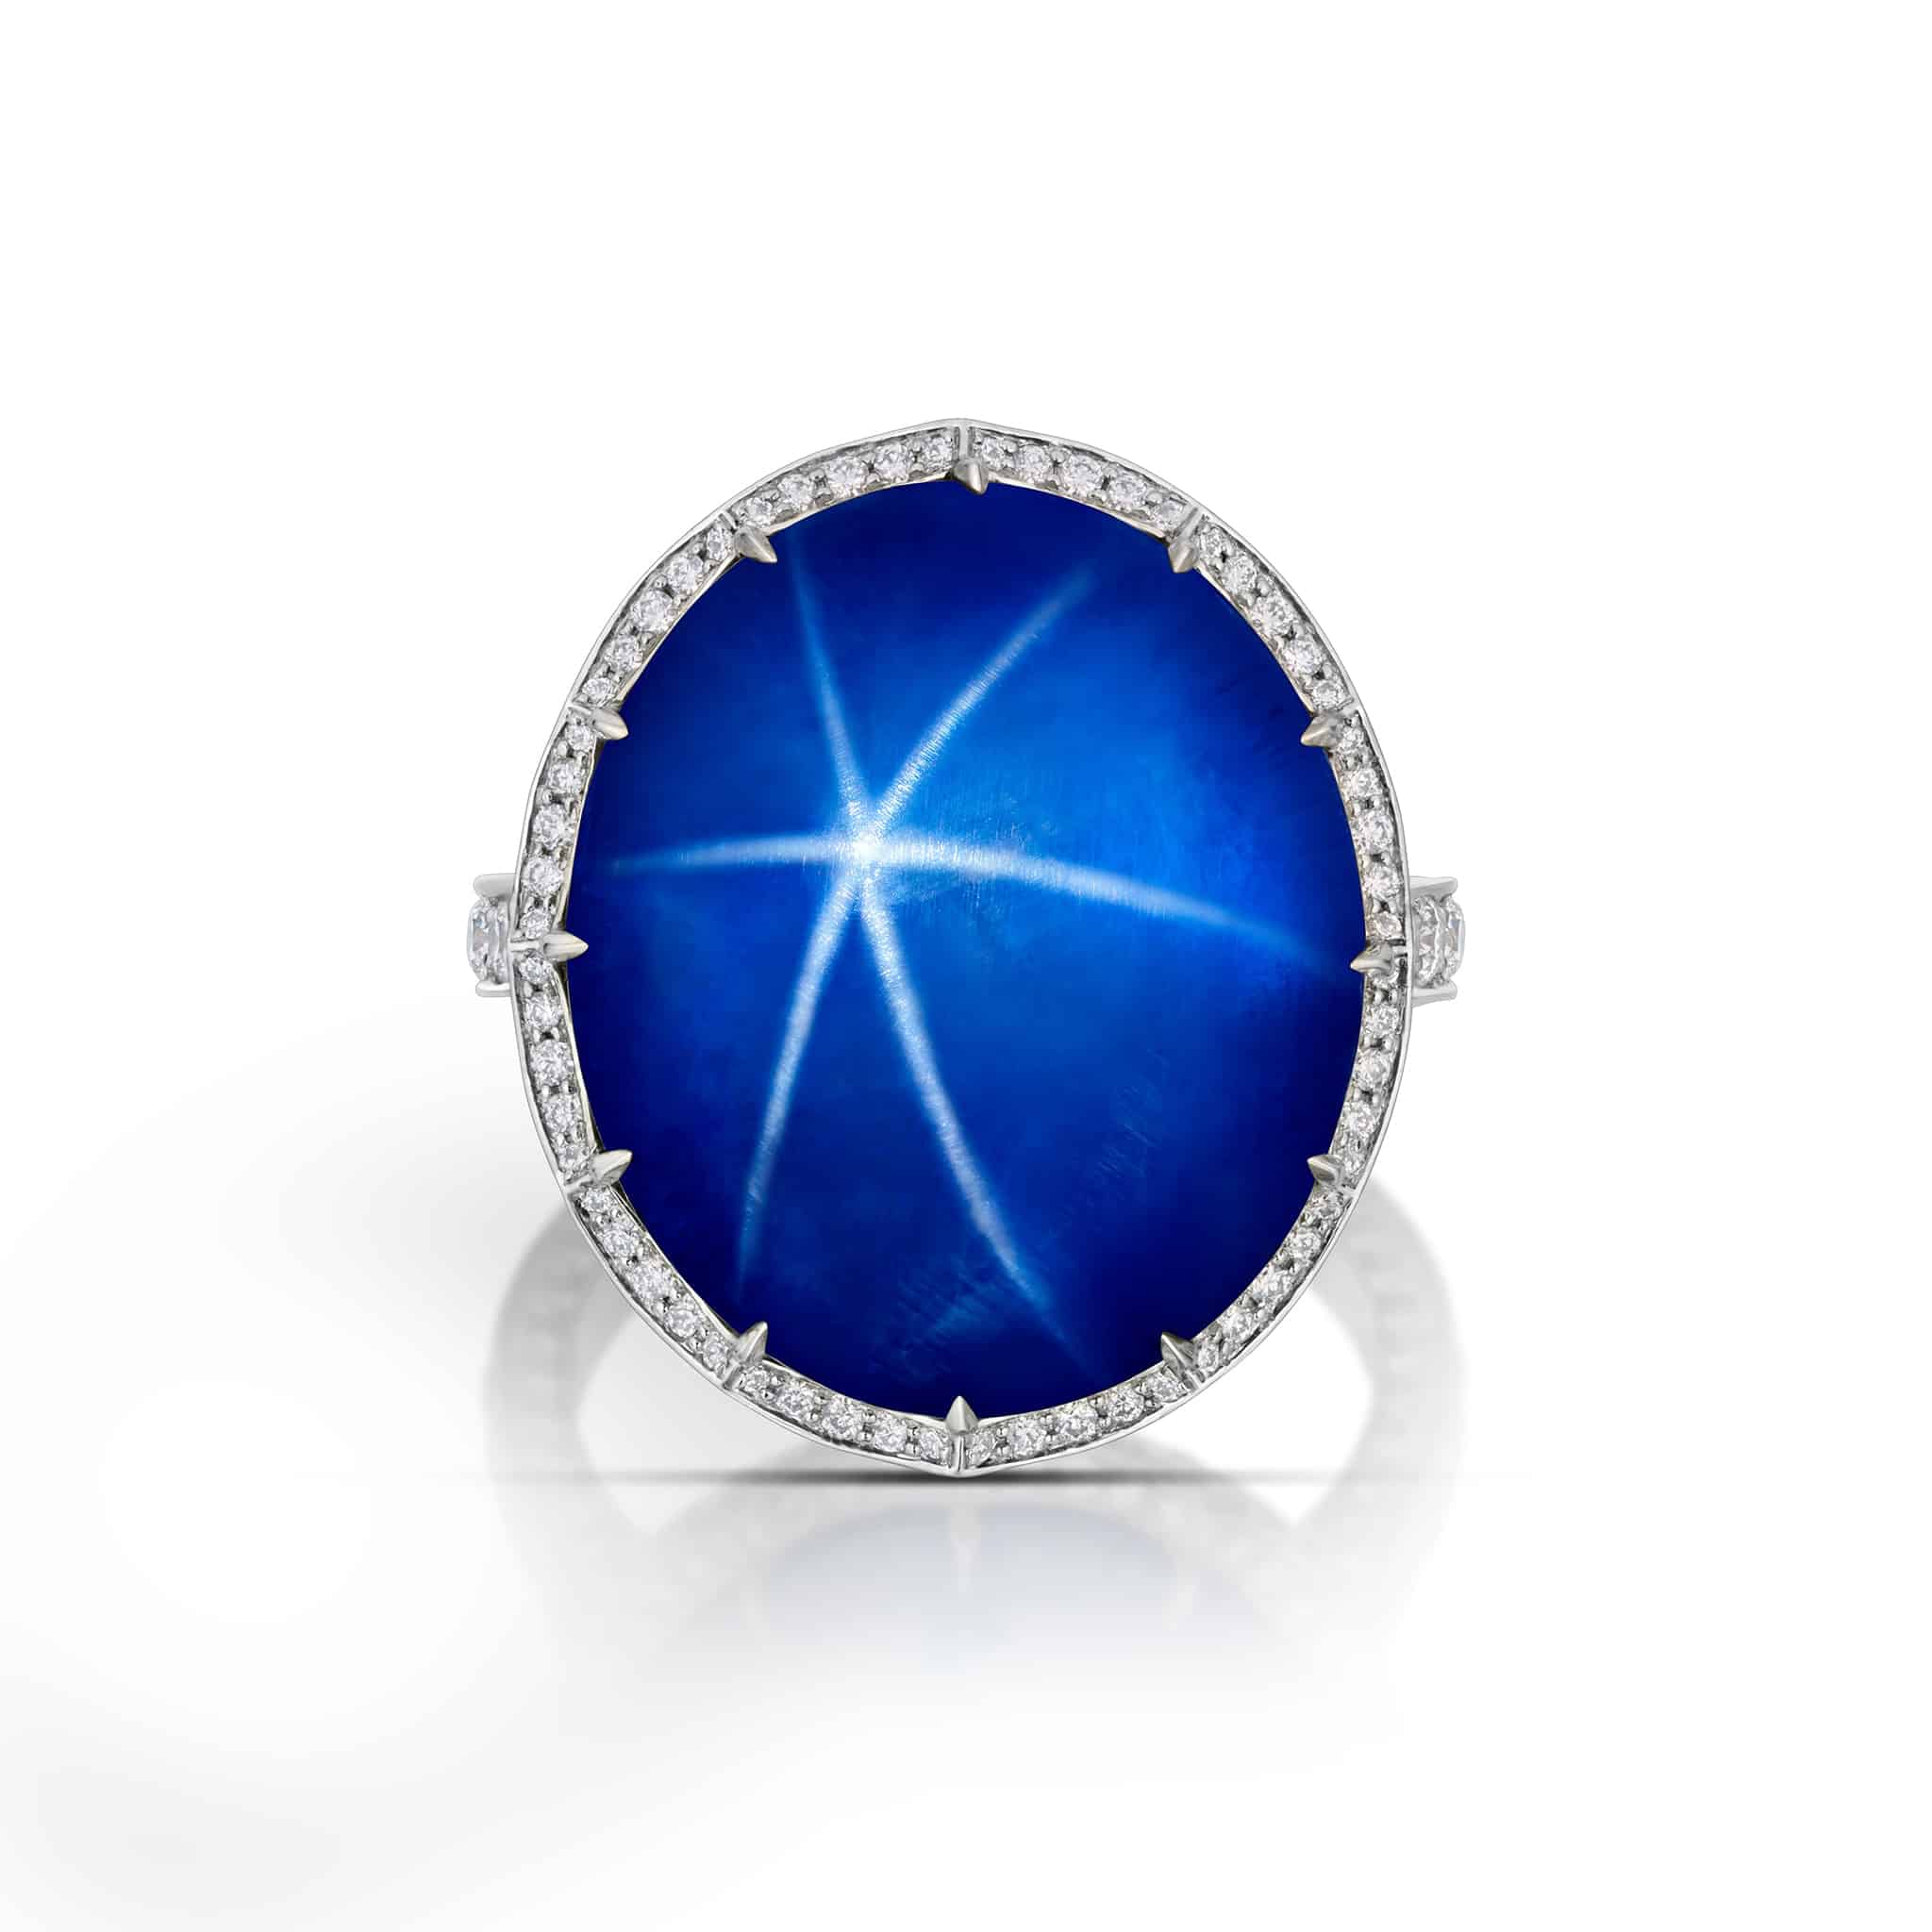 Buy Vintage Blue Star Sapphire Diamond Ring in 14K White Gold Online in  India - Etsy